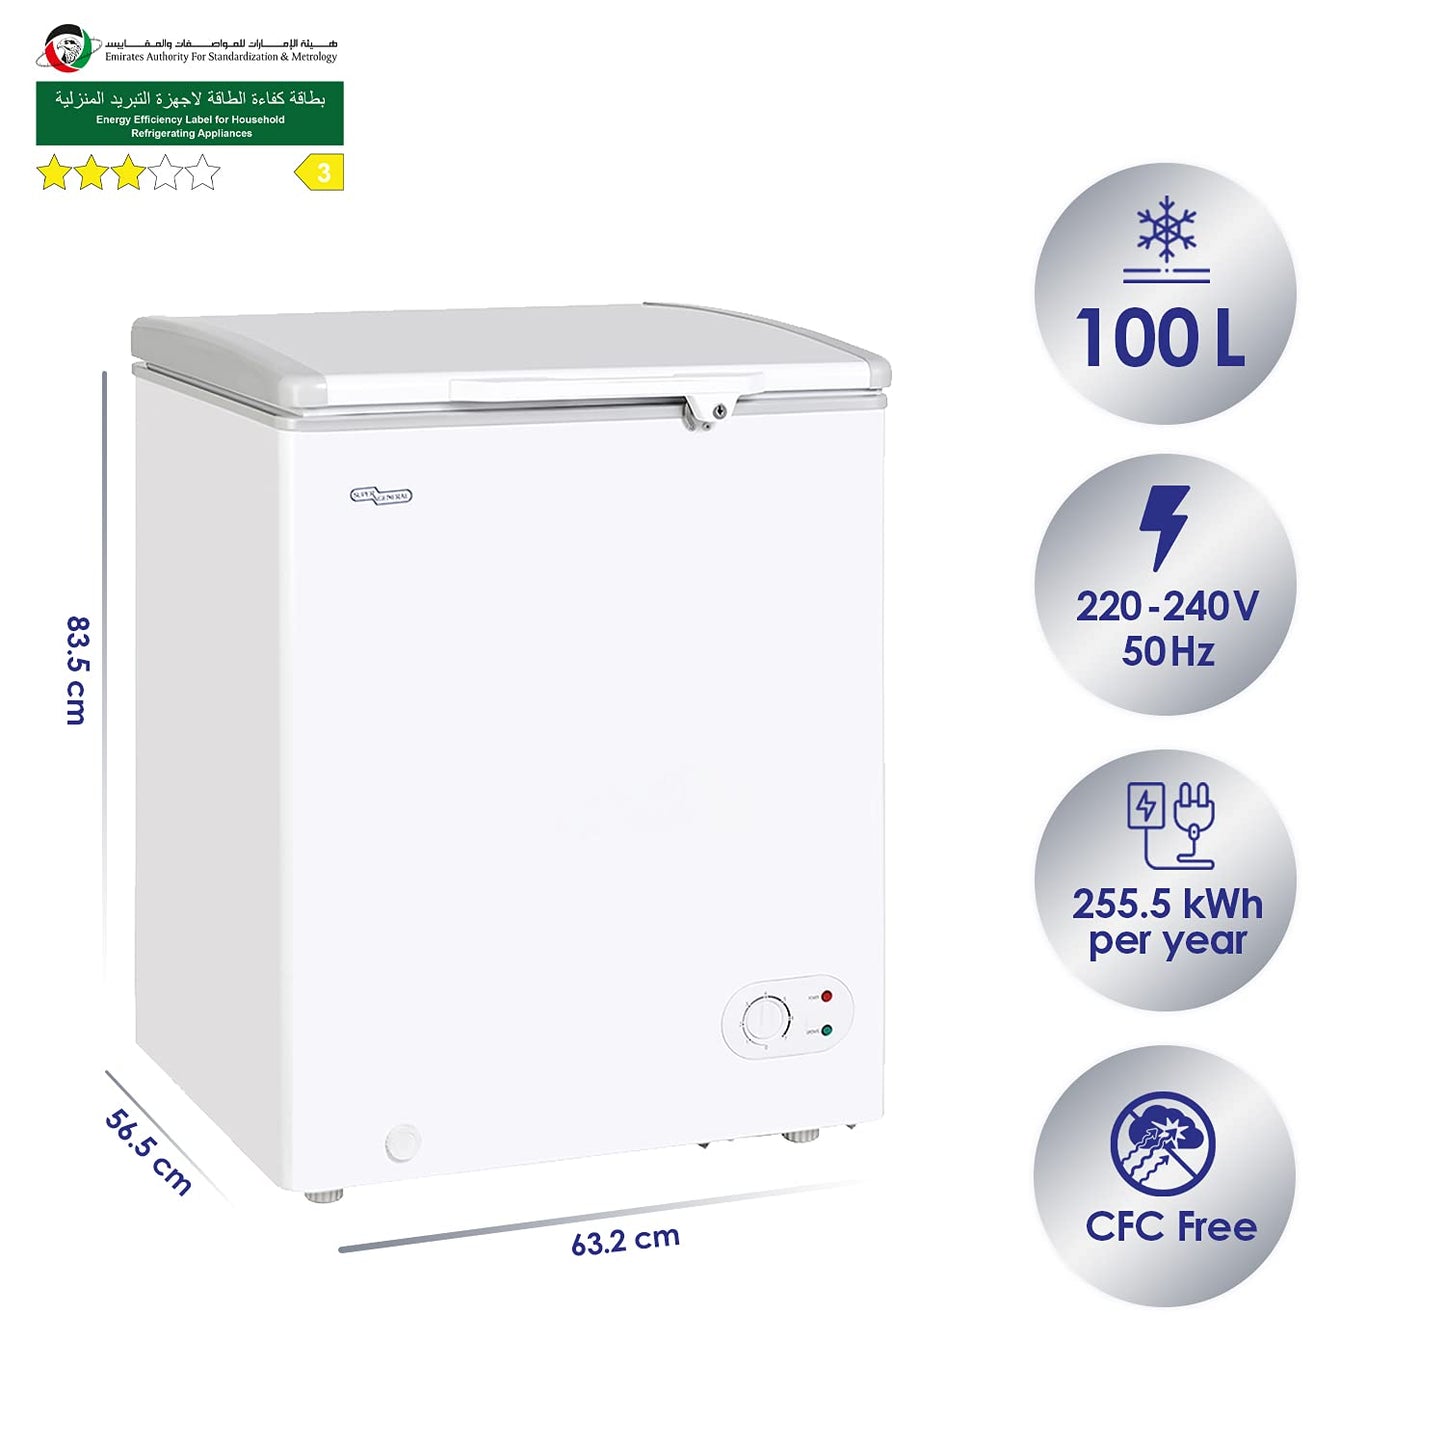 Super General Chest-Freezer 150 Liter Gross Volume, SGF-155-H, White, Compact Deep-Freezer with Storage-Basket, Lock & Key, Wheels, 63.2 x 56.5 x 83.5 cm, 1 Year Warranty